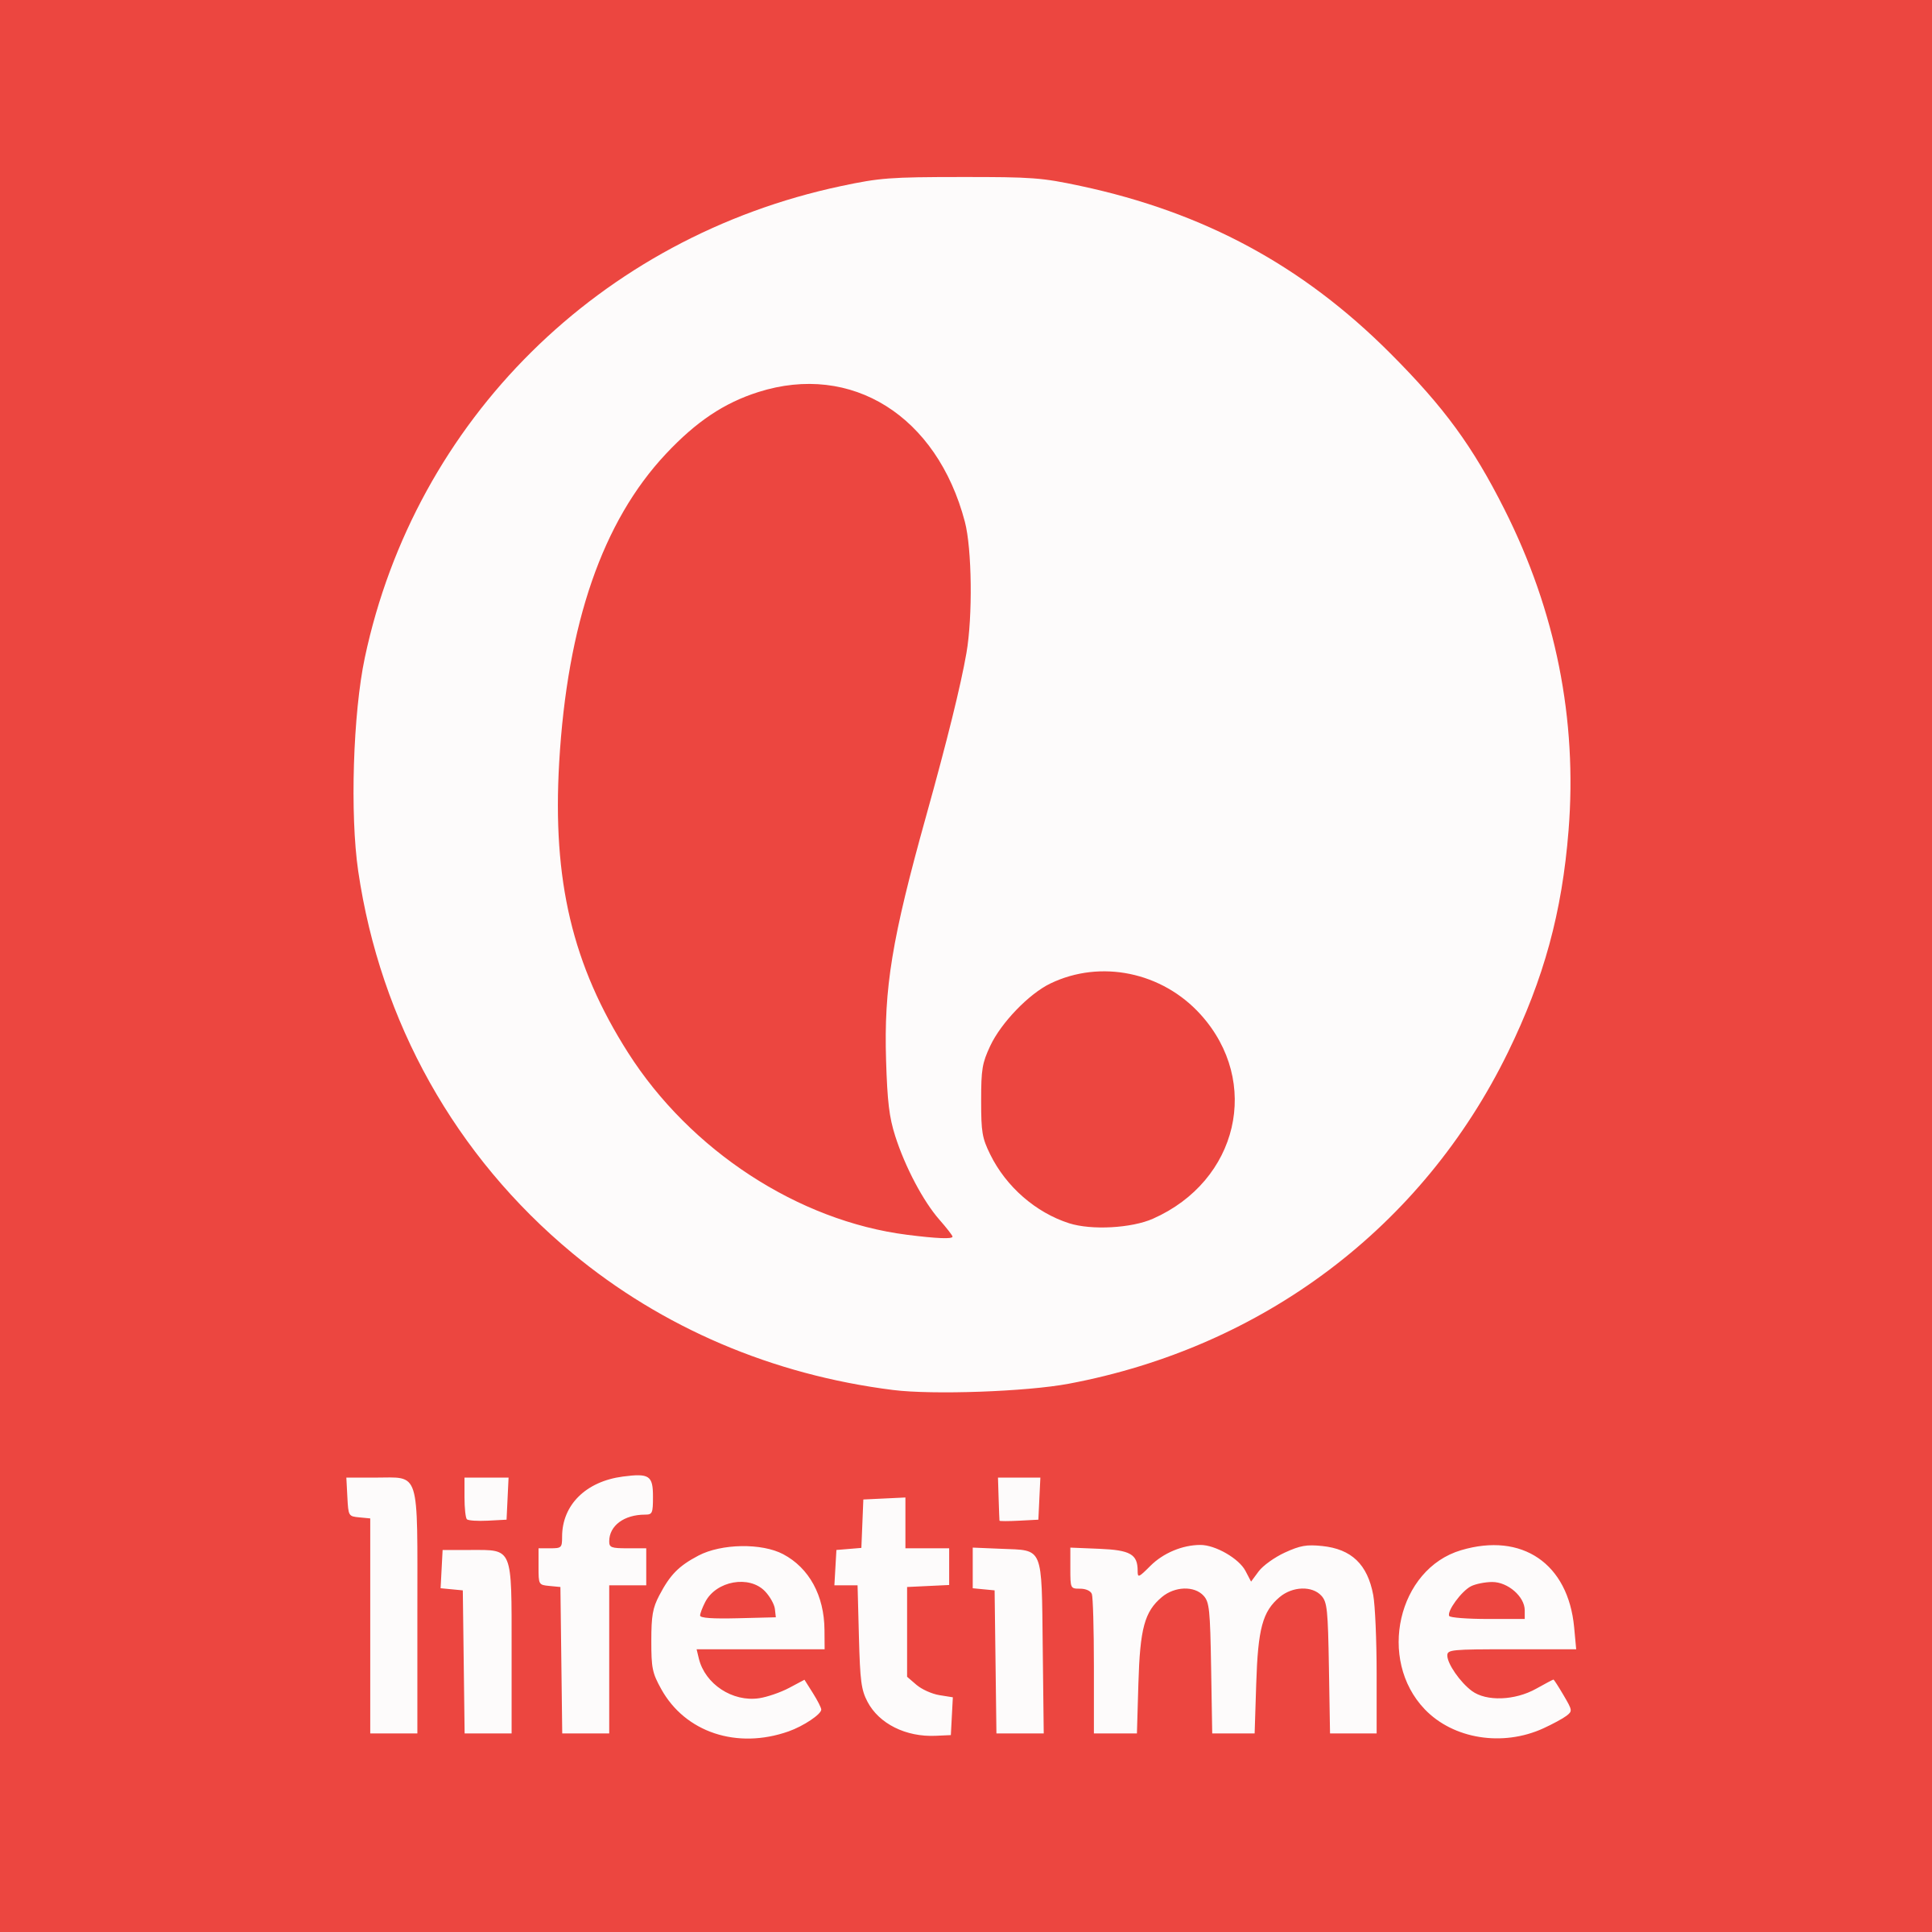 Lifetime Logo - Lifetime Logo PNG Transparent & SVG Vector - Freebie Supply